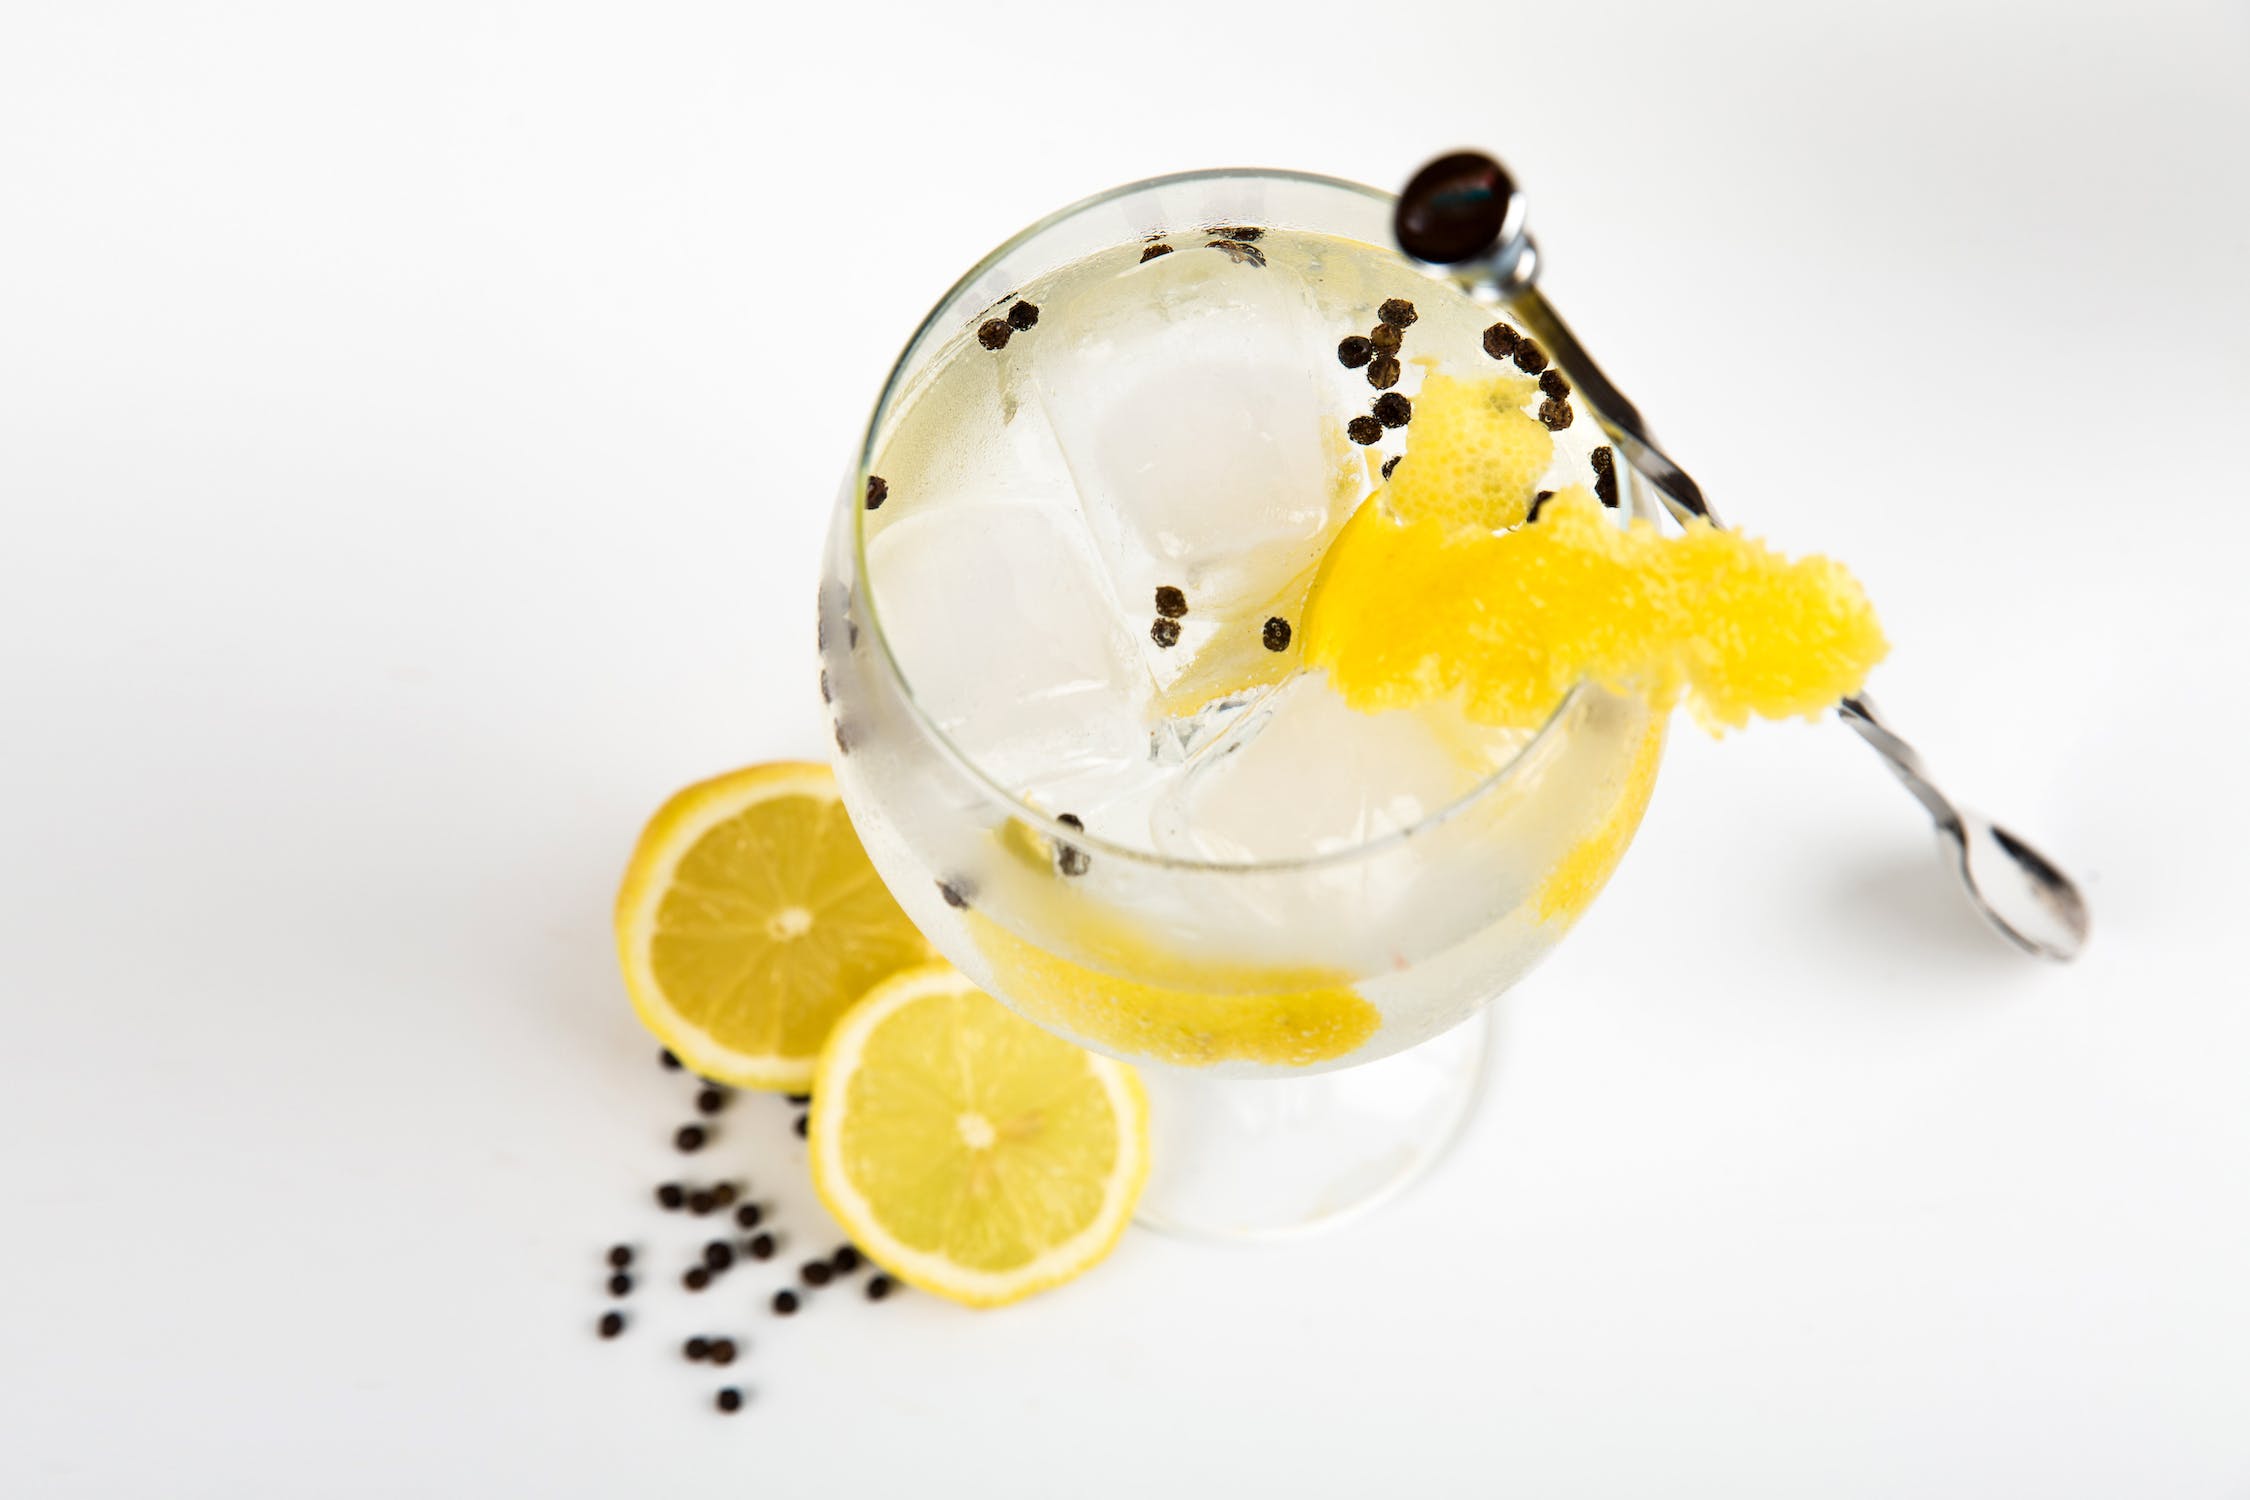 guida al gin tonic - Ricettepercucinare.com